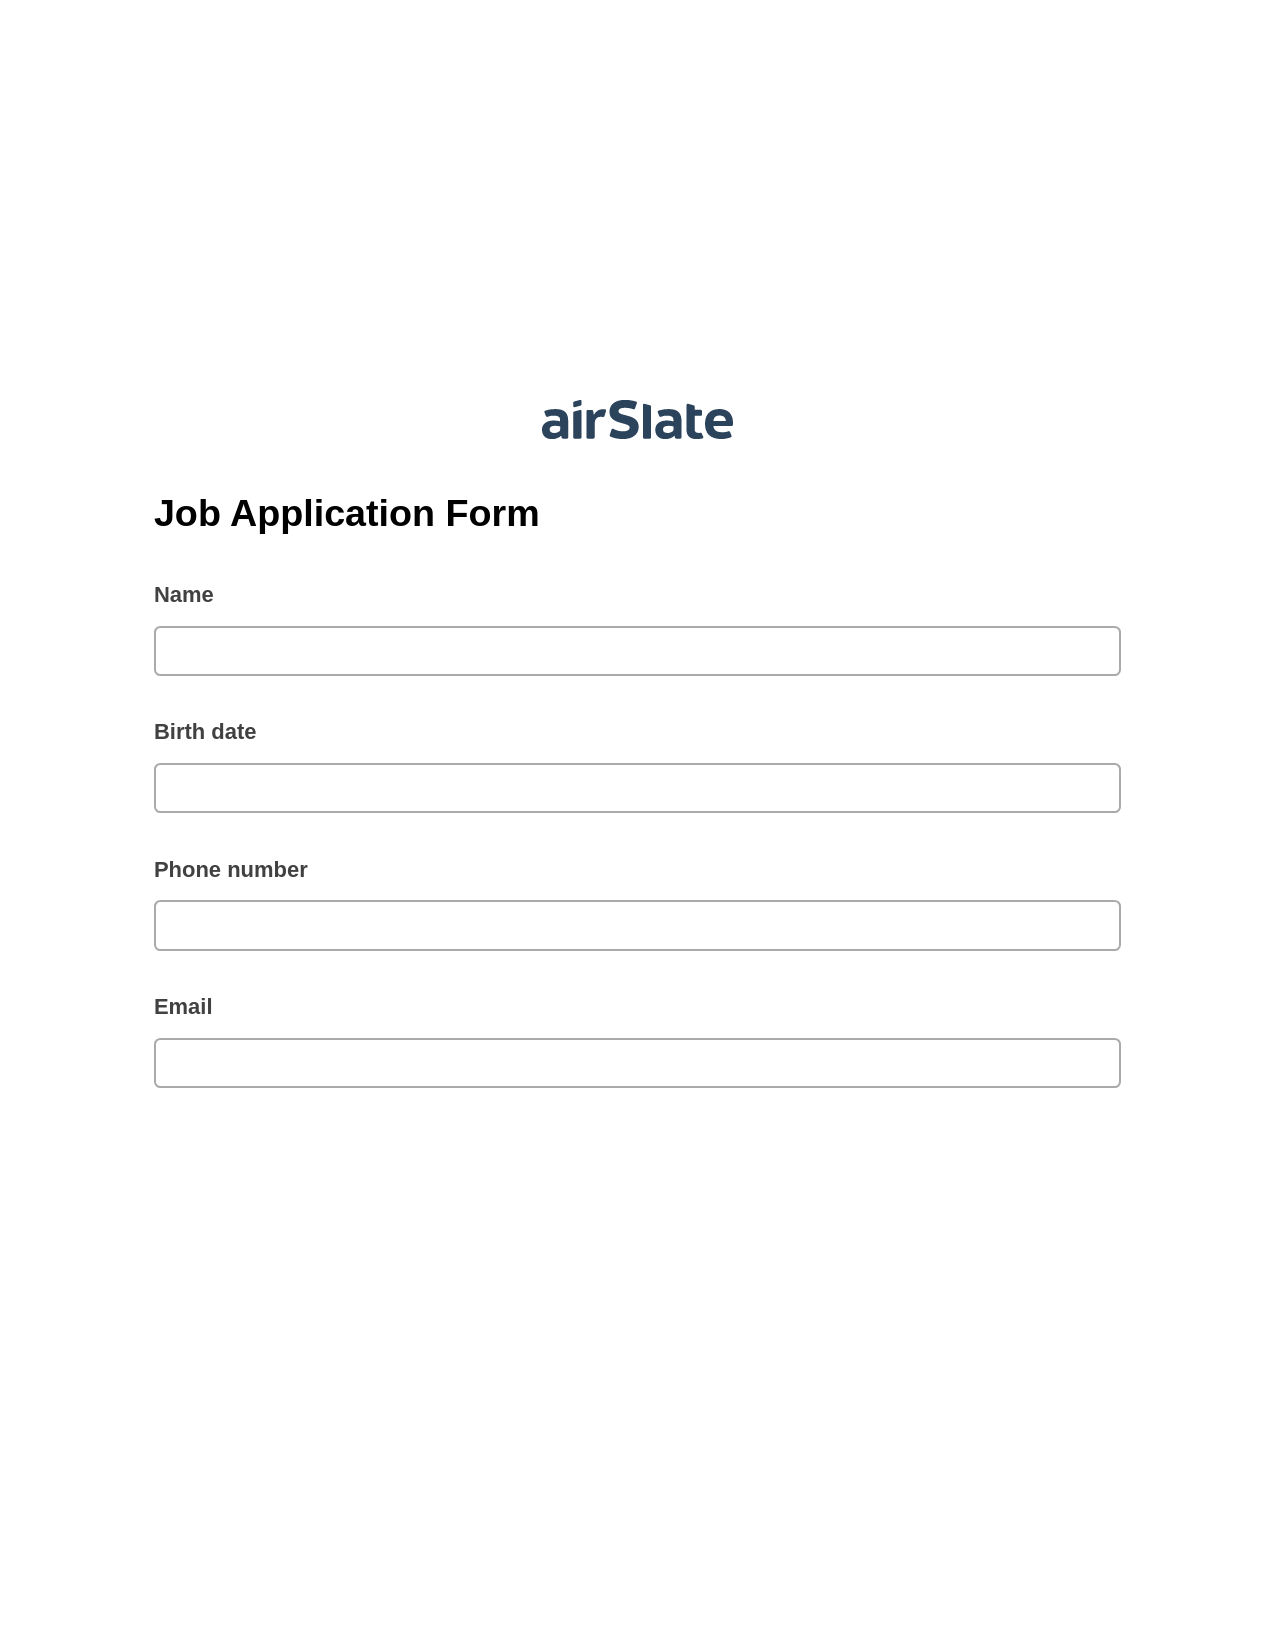 Multirole Job Application Form Pre-fill from Google Sheets Bot, Webhook Bot, Export to MySQL Bot